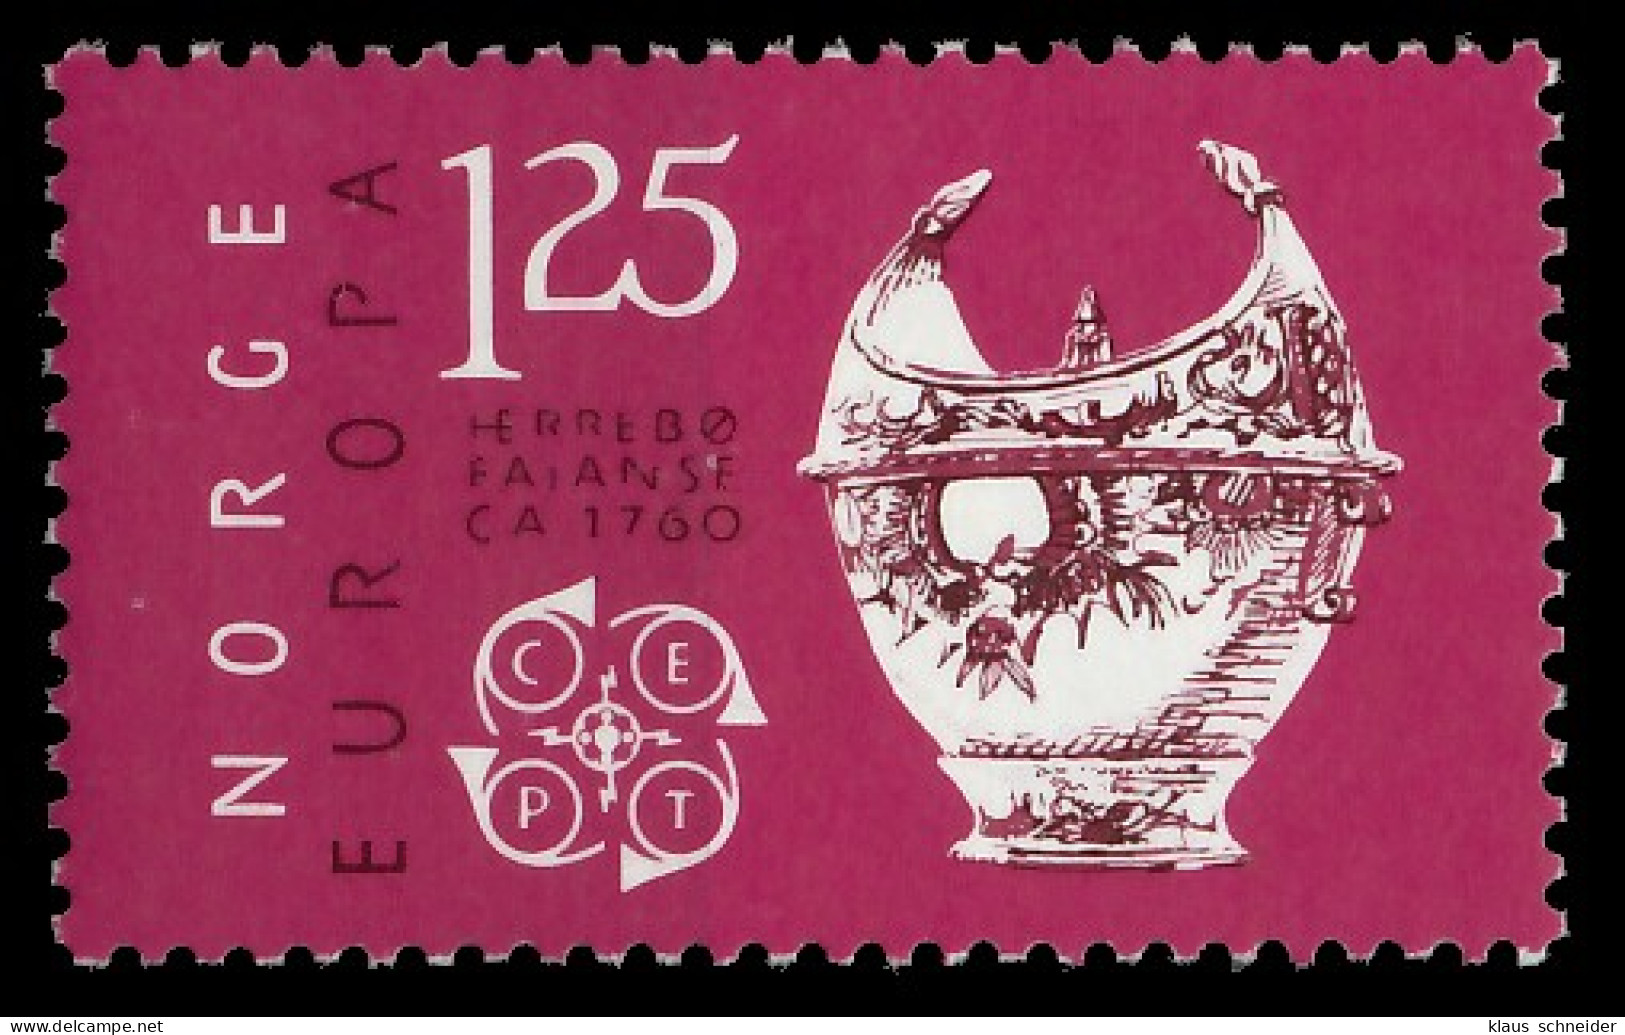 NORWEGEN 1976 Nr 724 Postfrisch X04575A - Unused Stamps